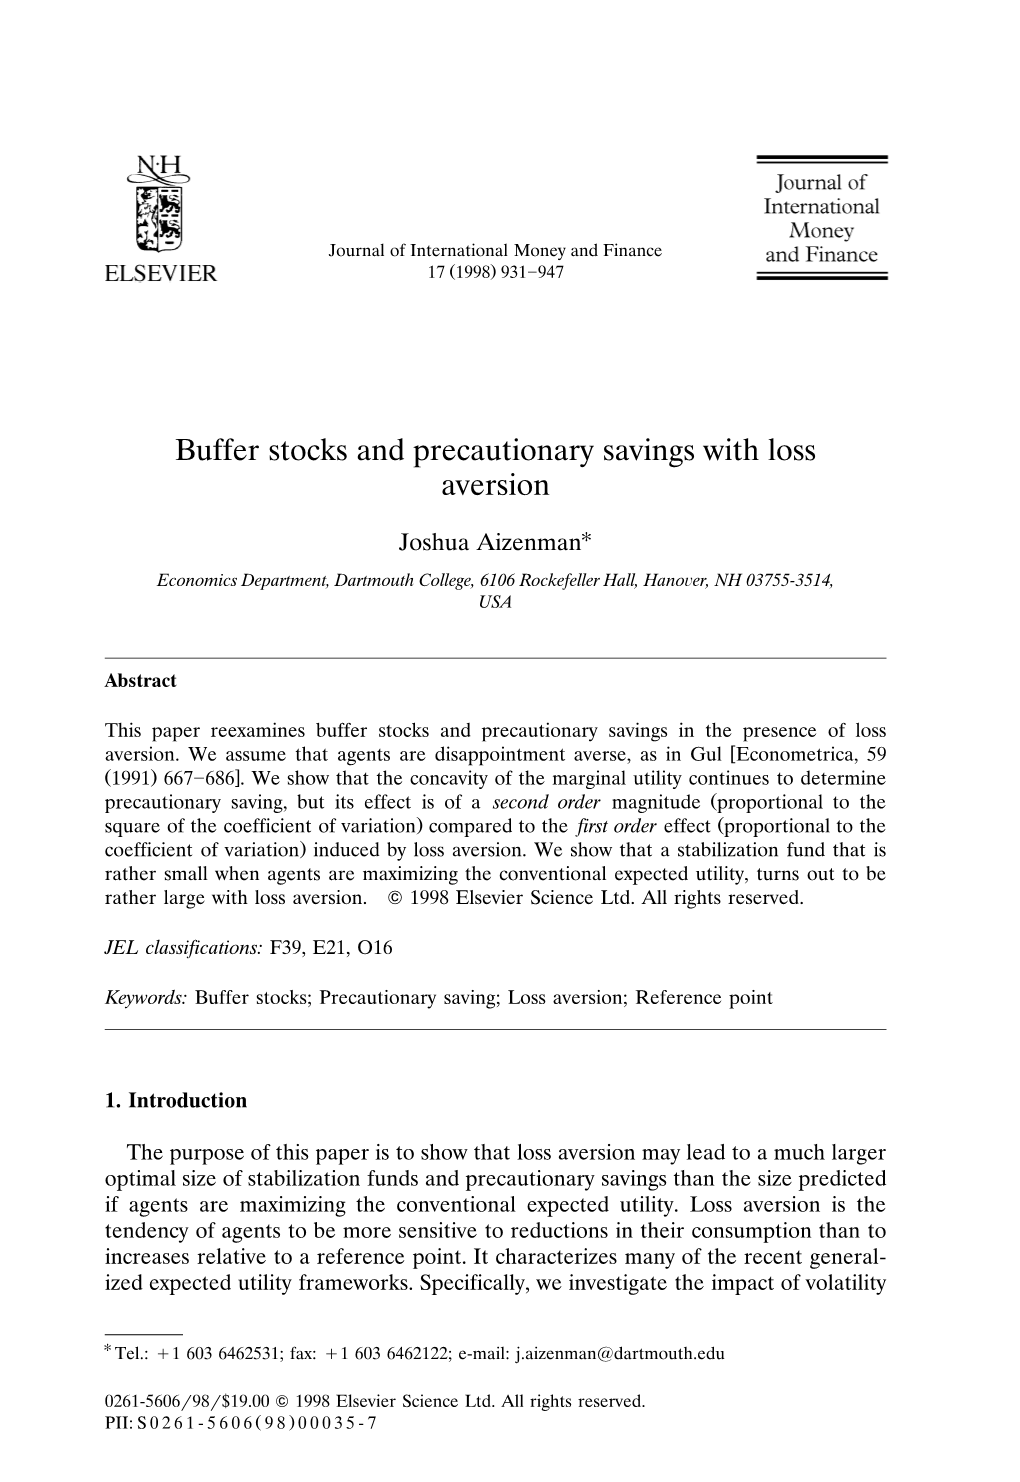 Buffer Stocks and Precautionary Savings with Loss Aversion